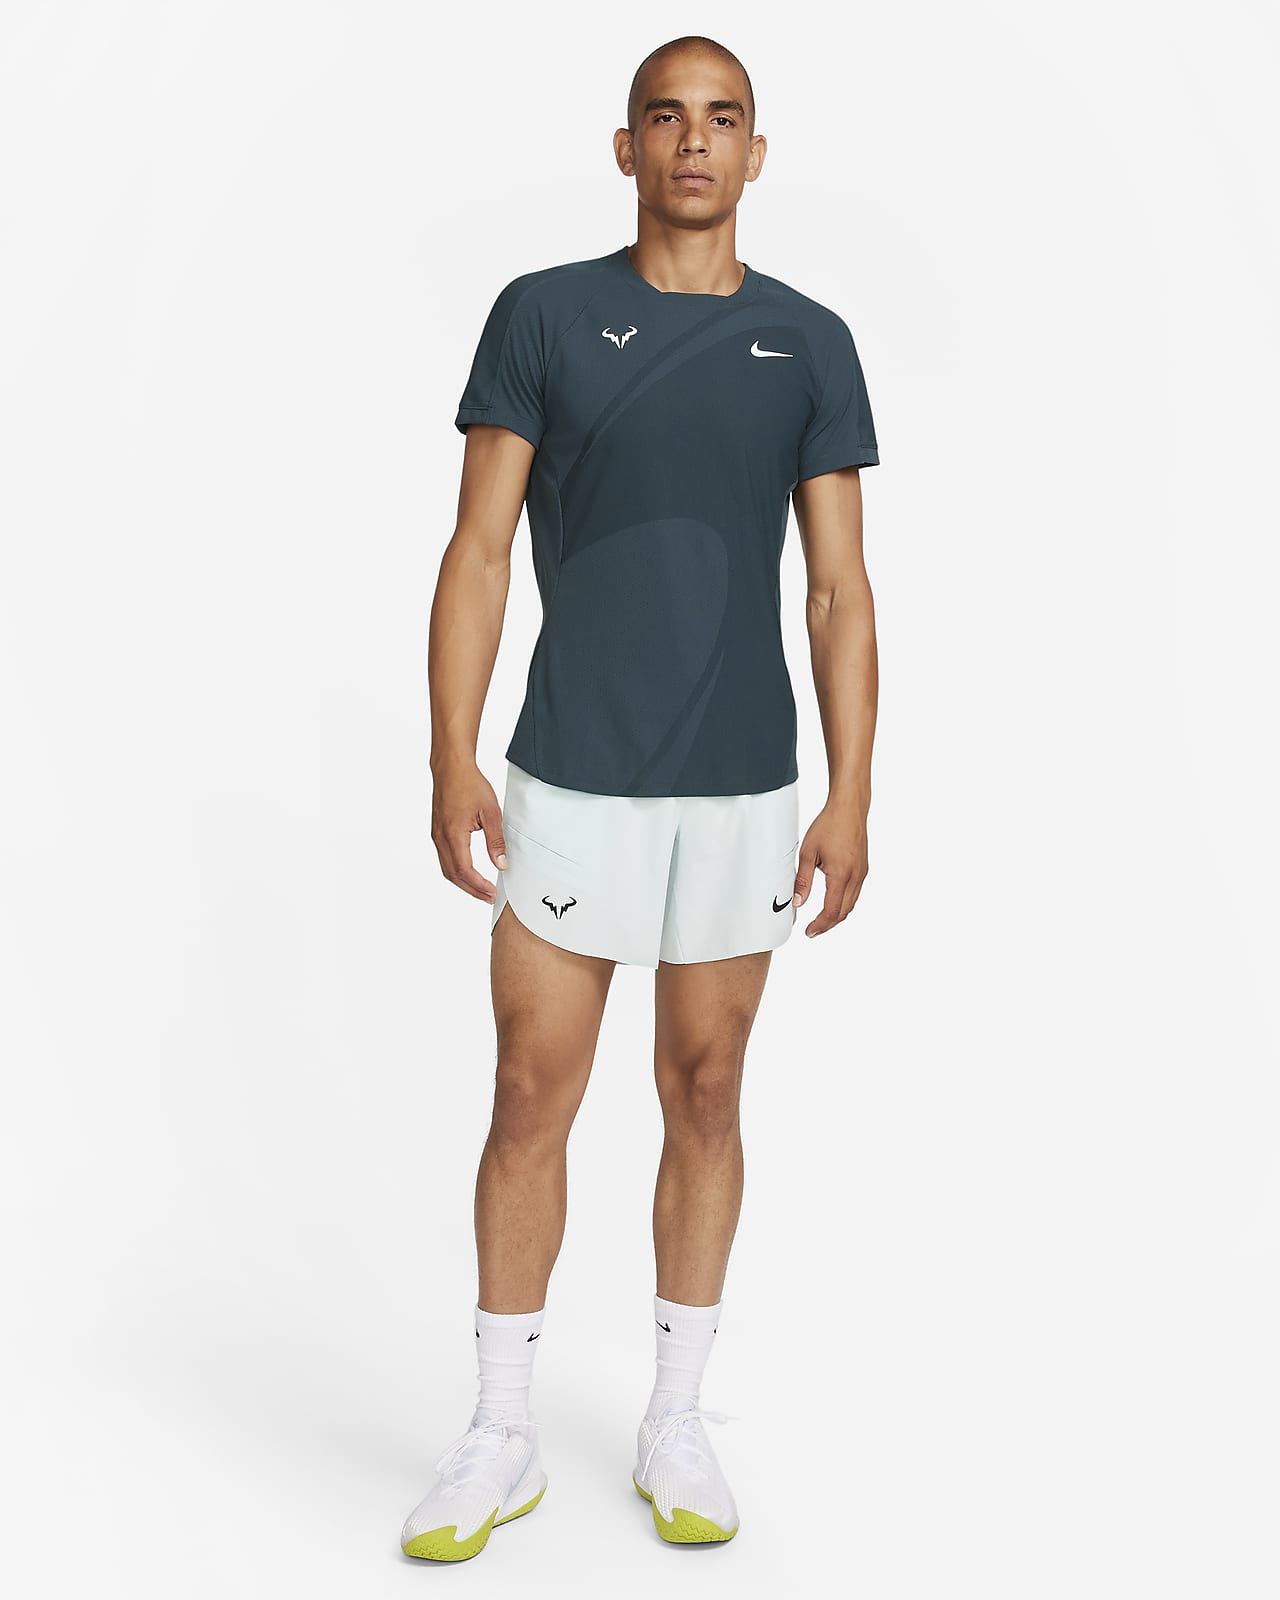 Rafa Men's Nike Dri-FIT ADV Short-Sleeve Tennis Top. Nike LU